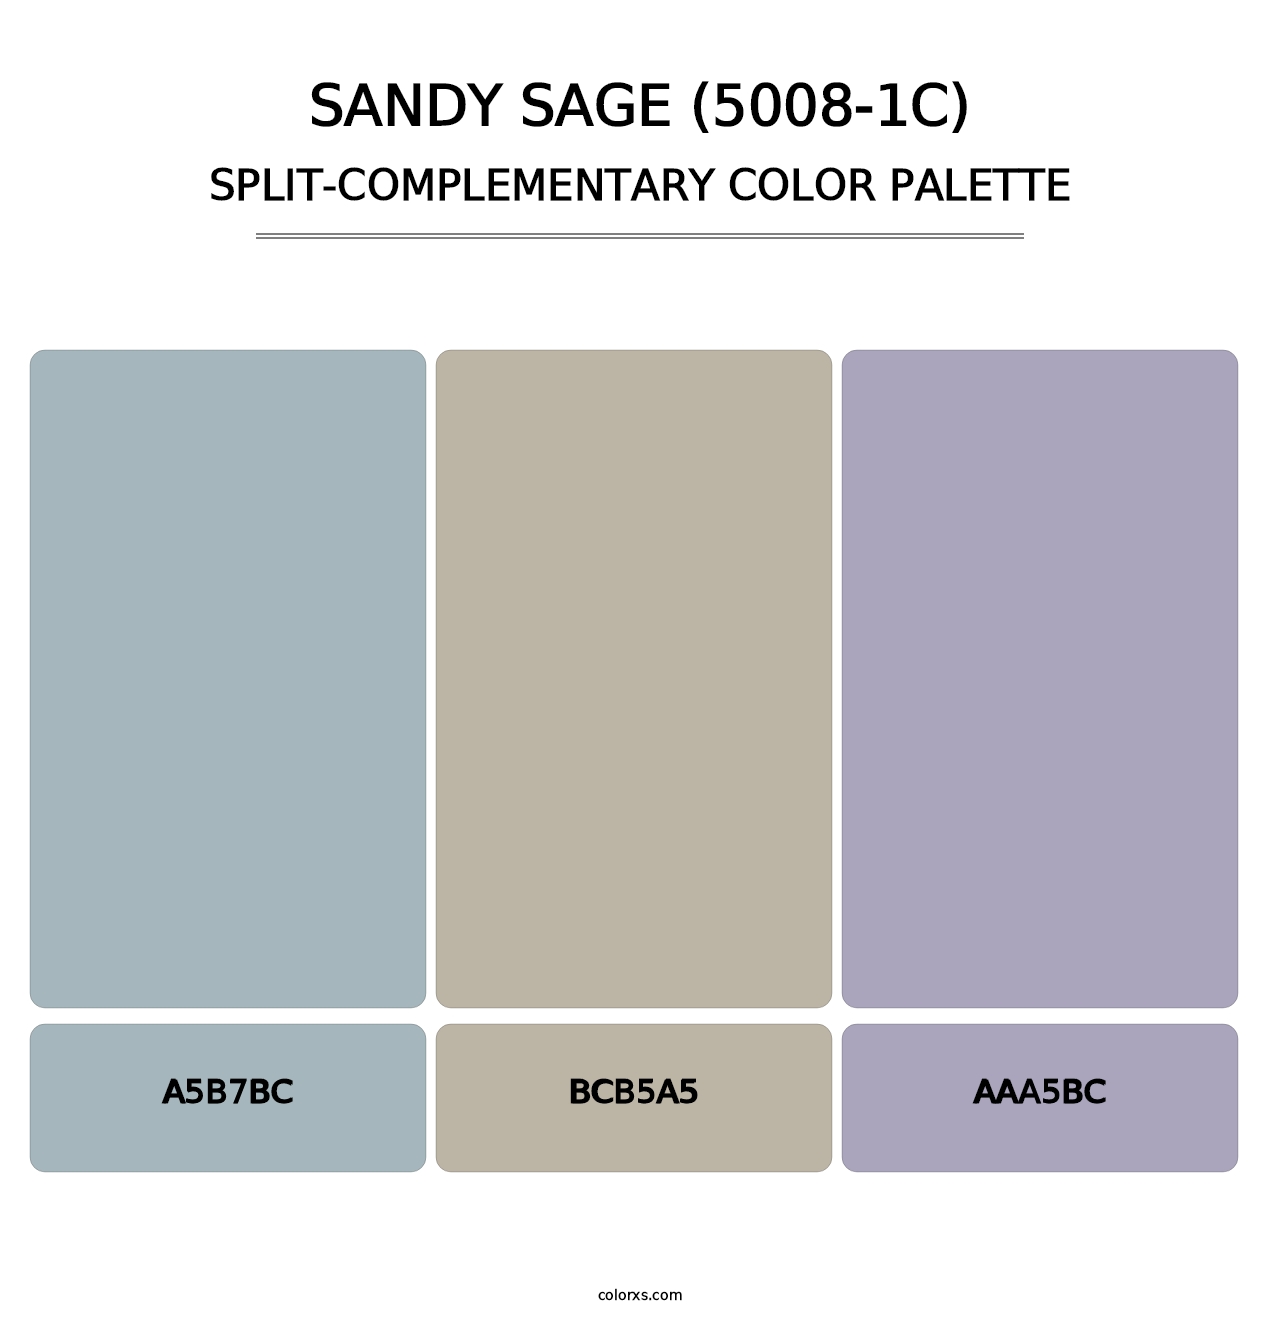 Sandy Sage (5008-1C) - Split-Complementary Color Palette